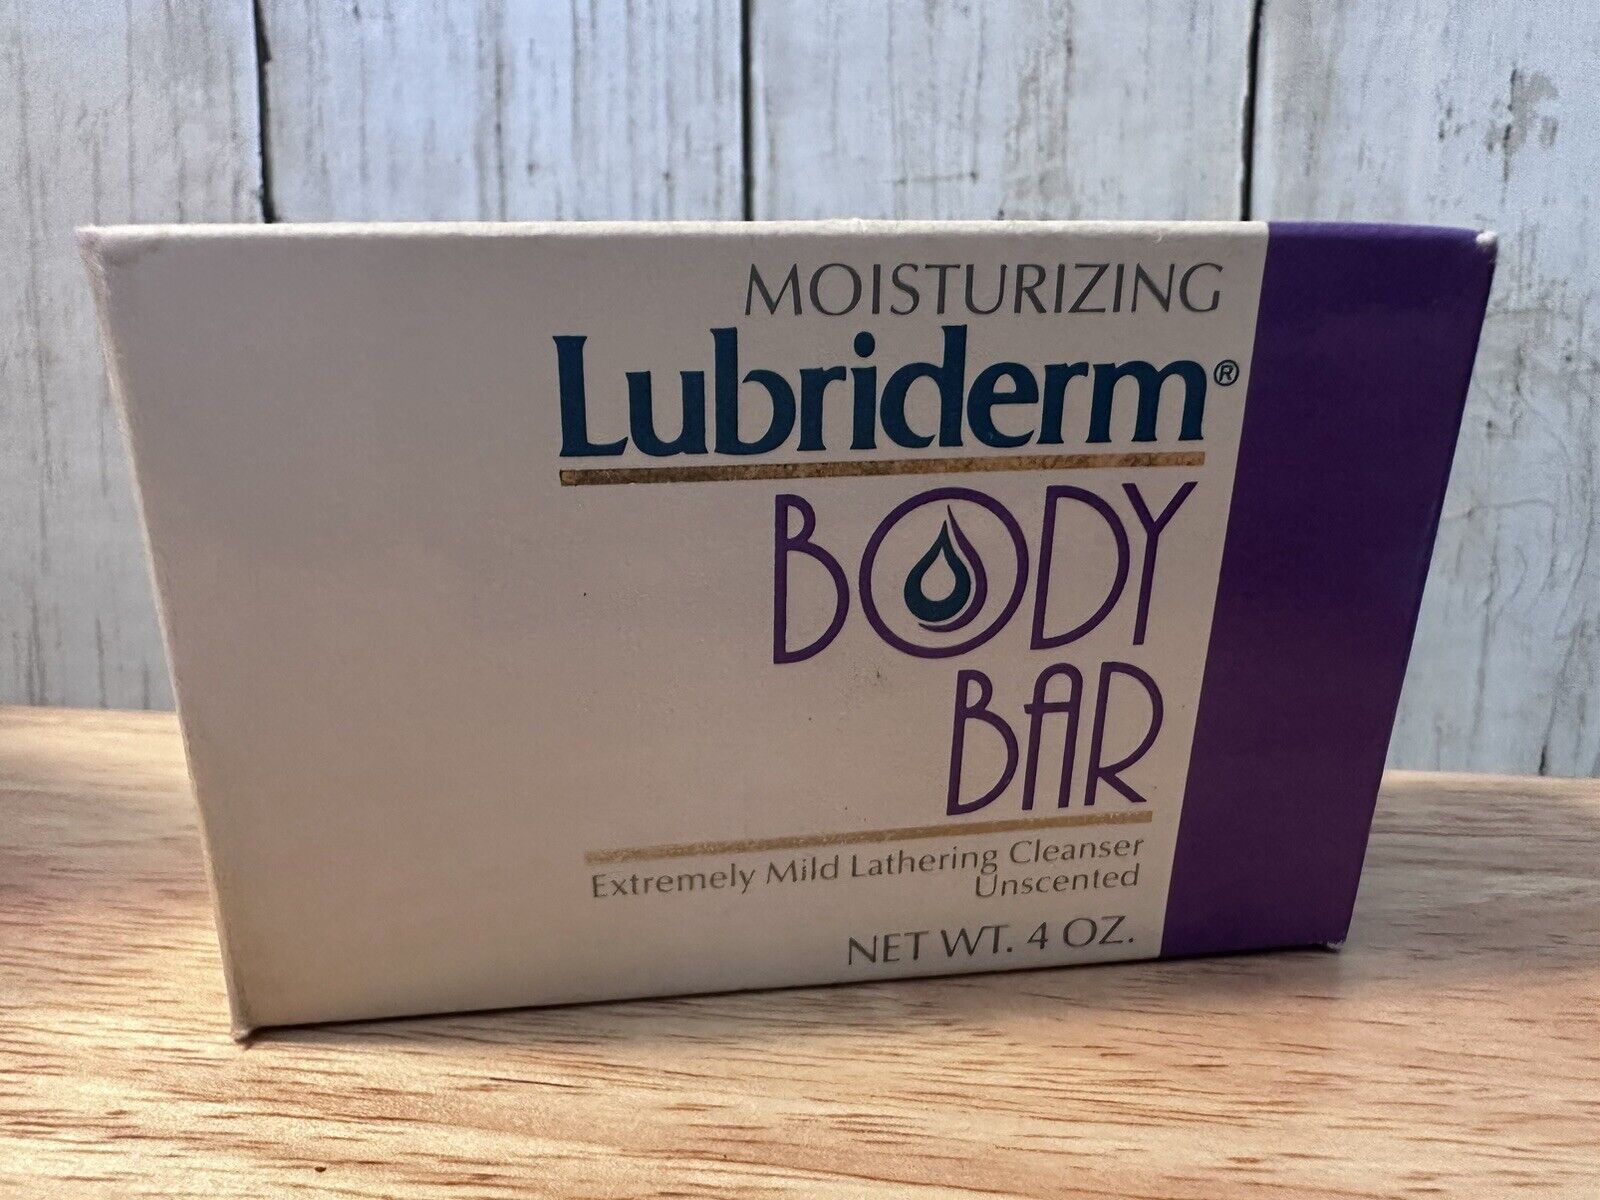 Vintage 1989 Lubriderm Body Bar Soap Moisturizing Mild Lathering Unscented 4 oz